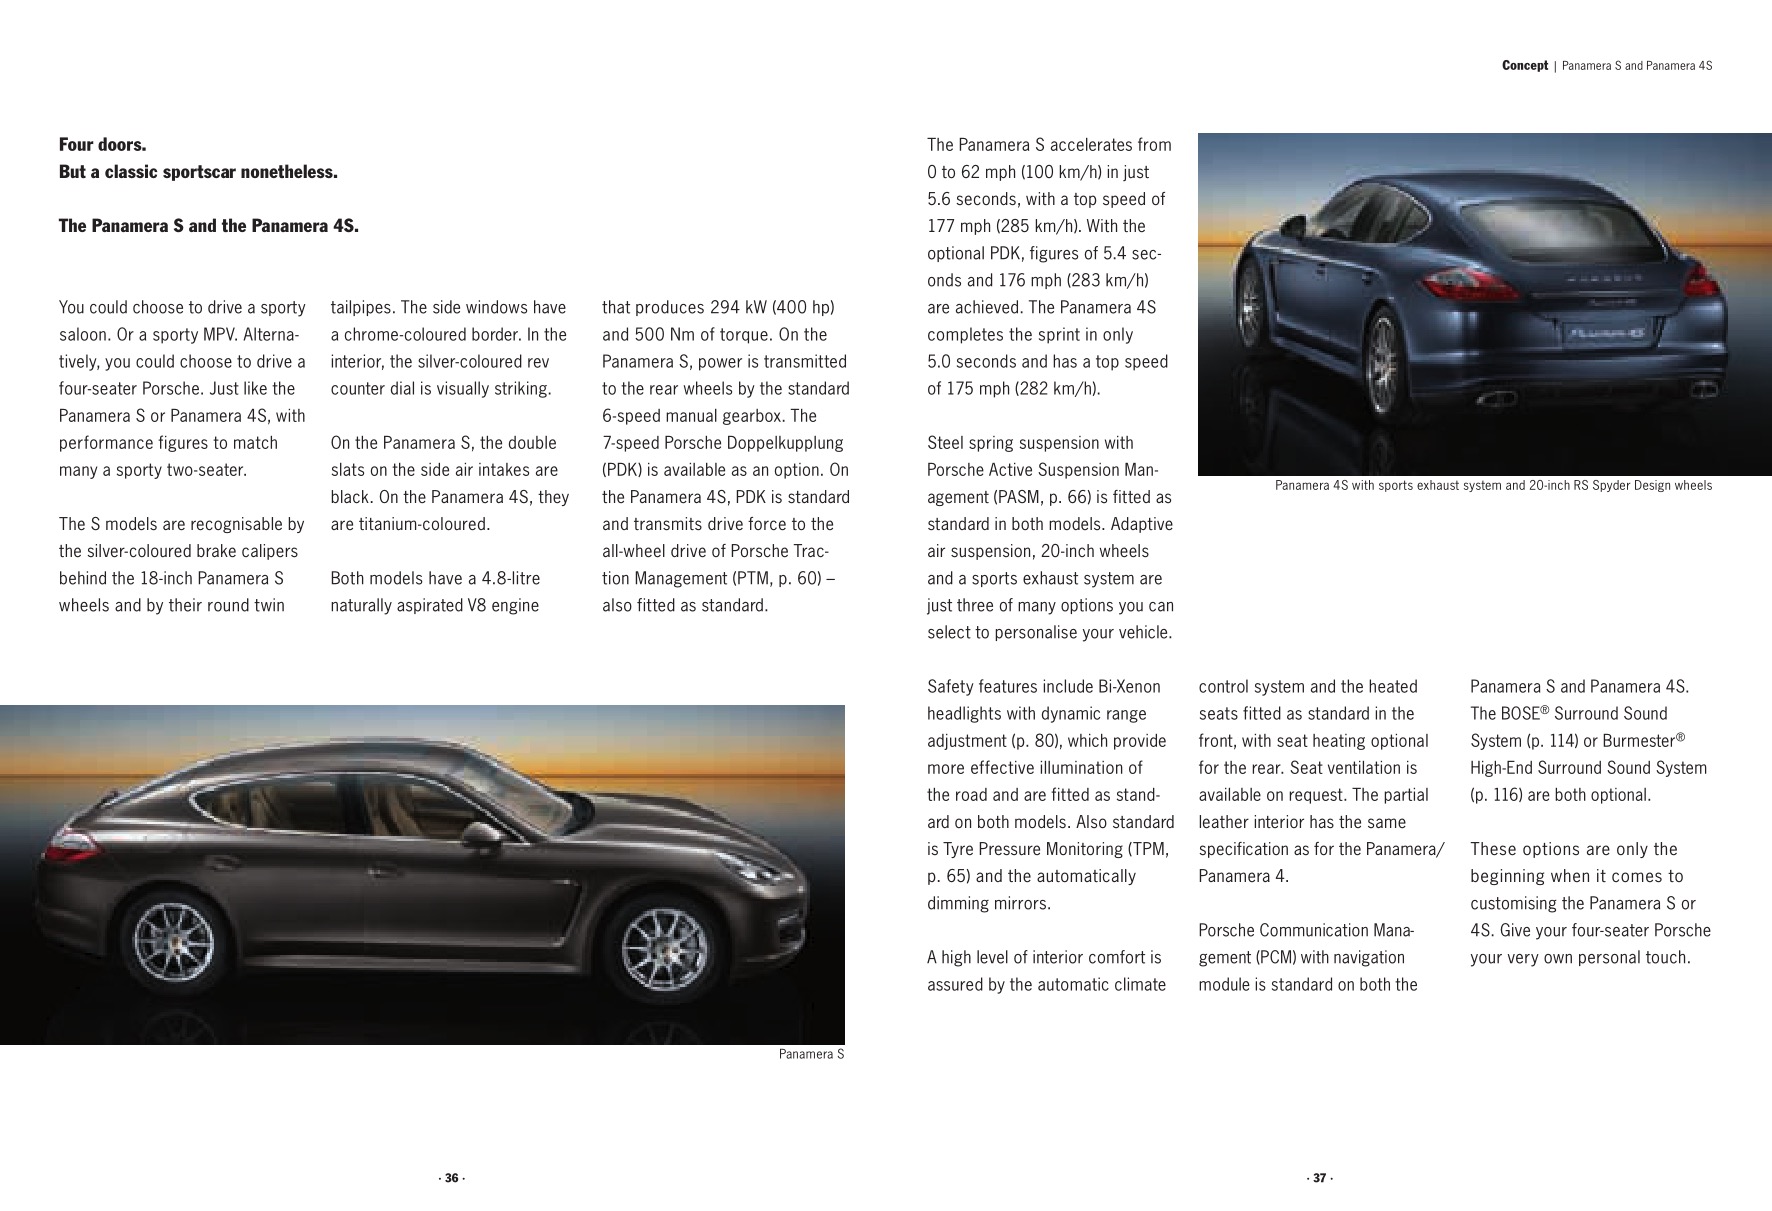 2010 Porsche Panamera Brochure Page 26